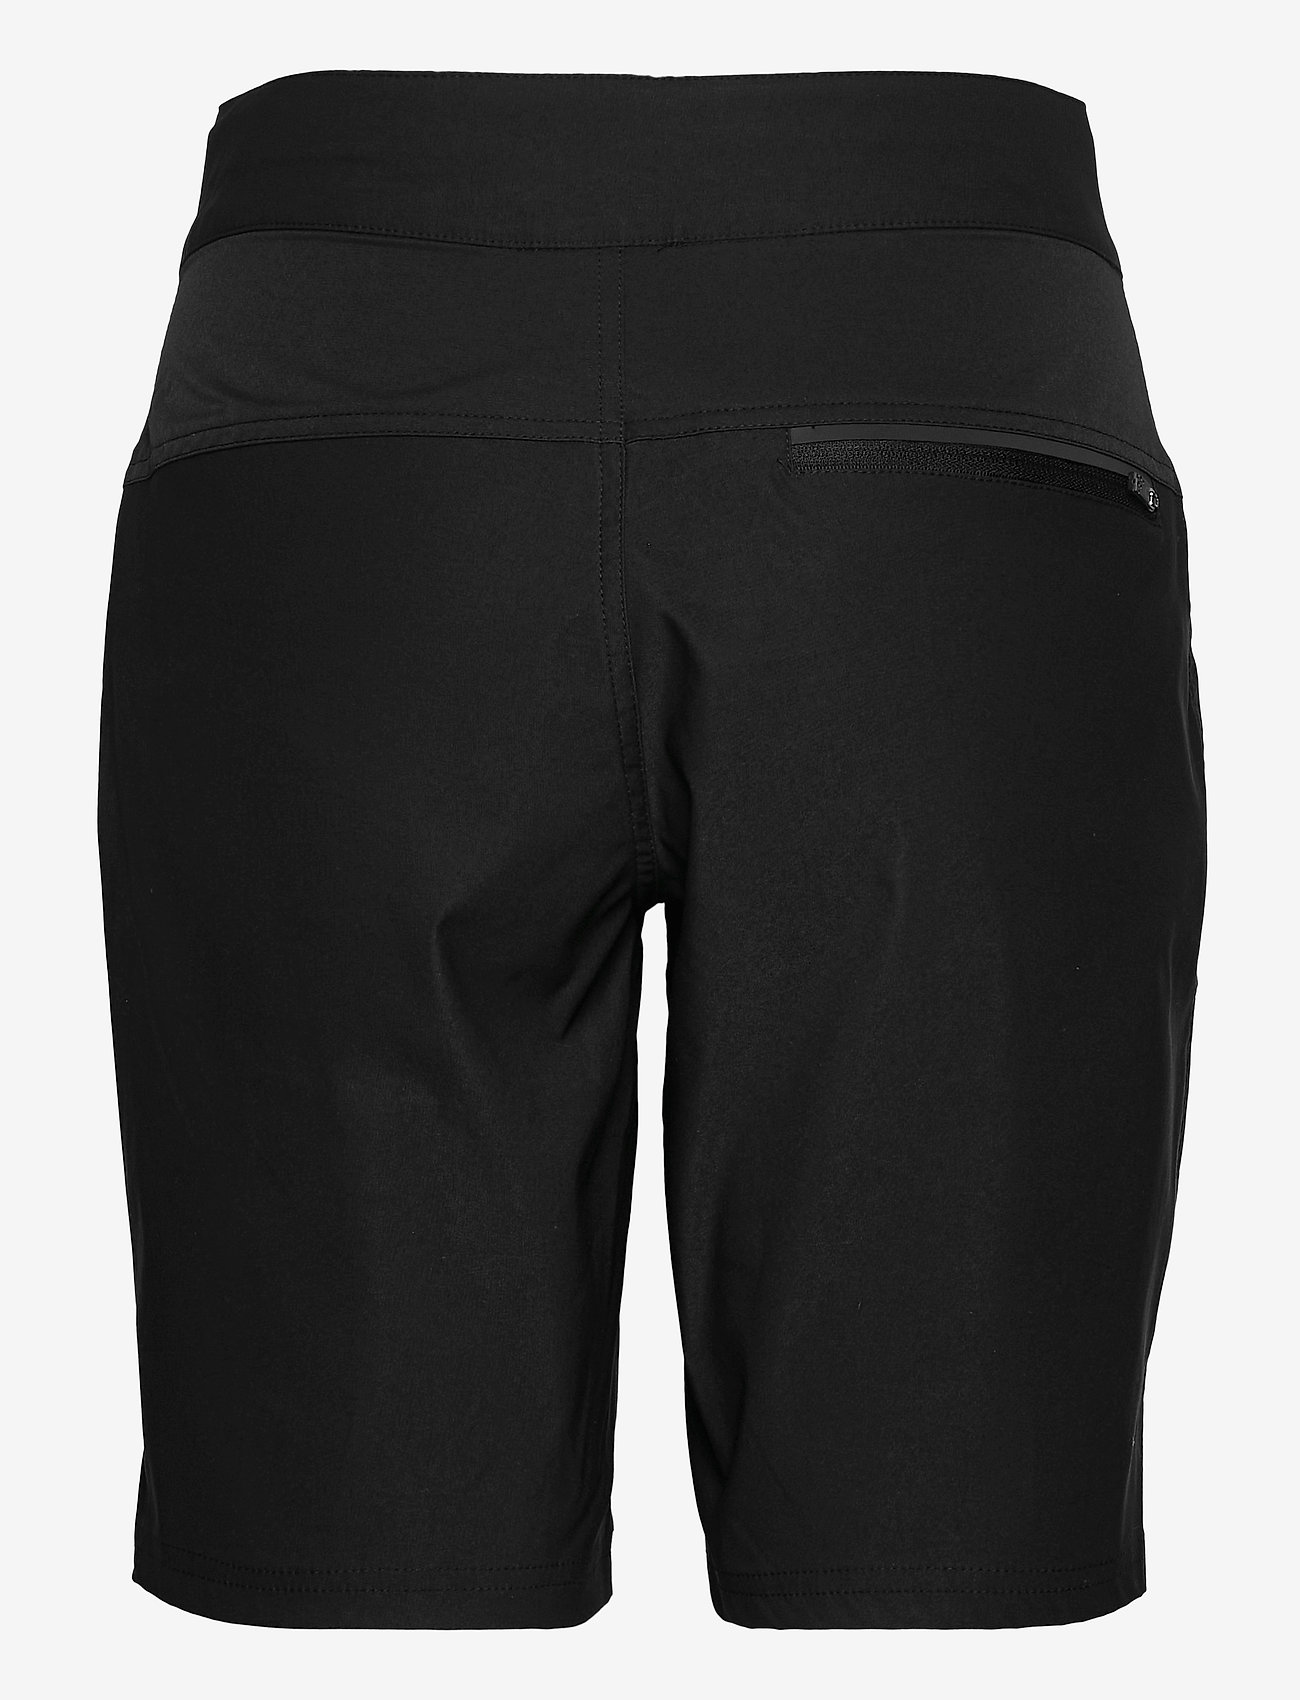 Craft - Core Offroad Xt Shorts W - cycling shorts - black - 1